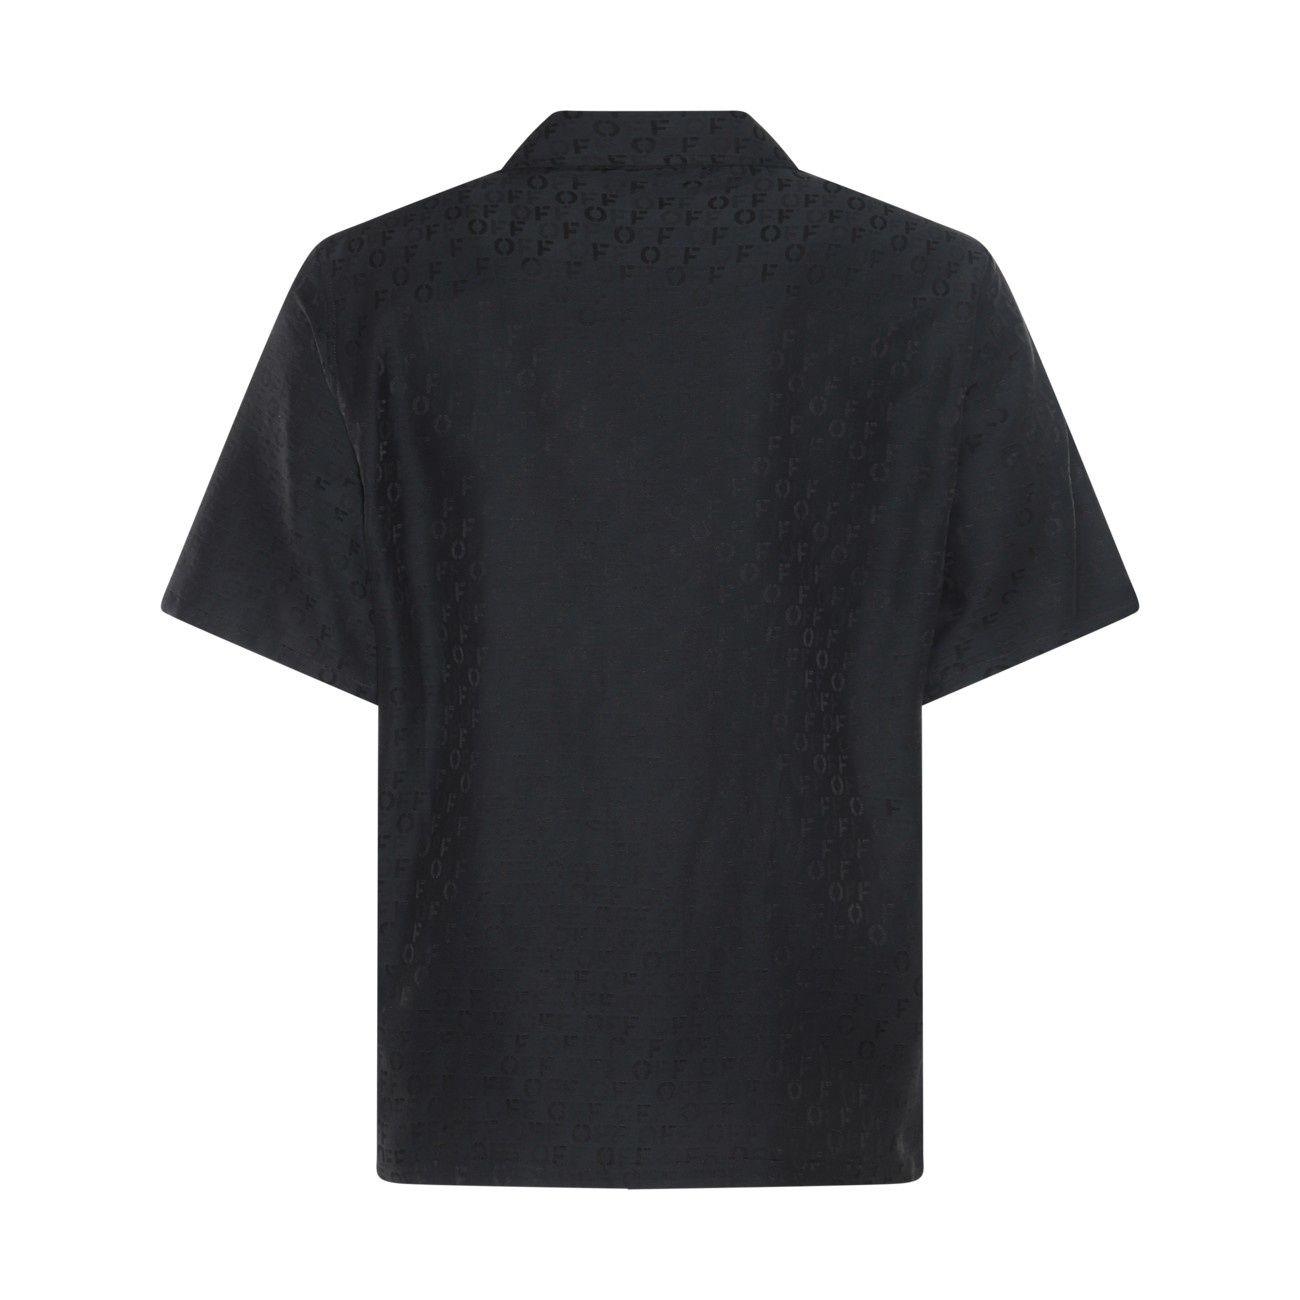 black cotton and silk blend shirt - 2